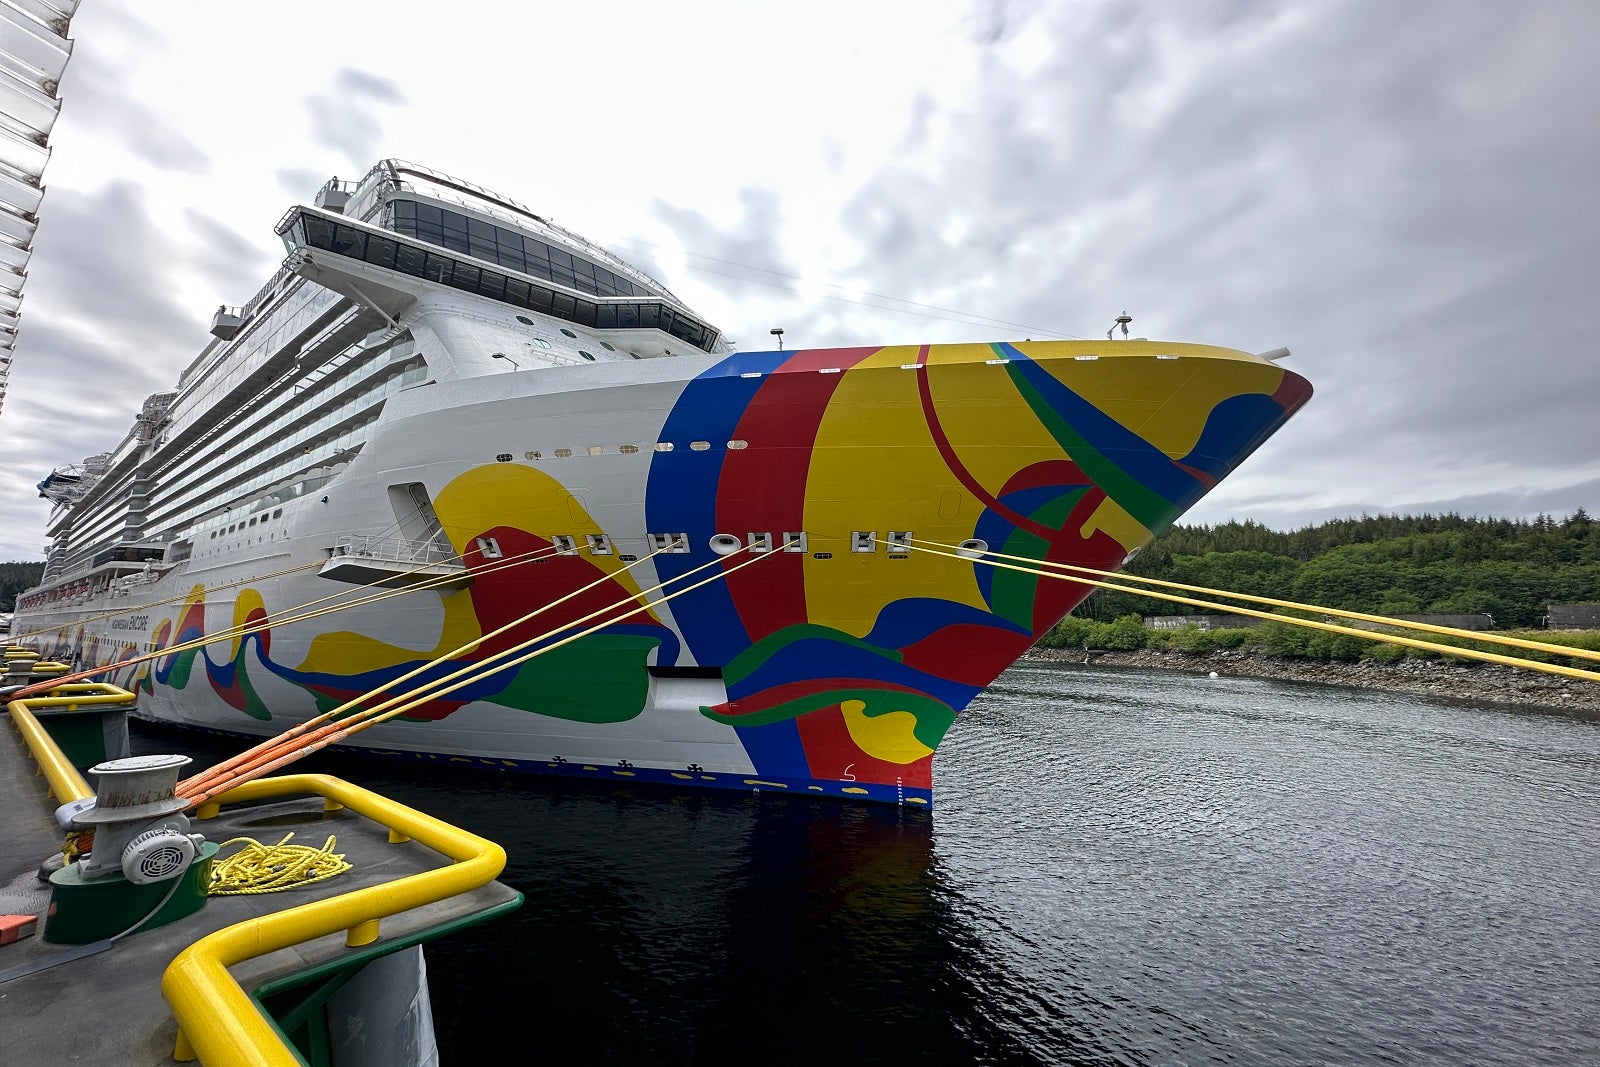 norwegian encore alaska cruise reviews